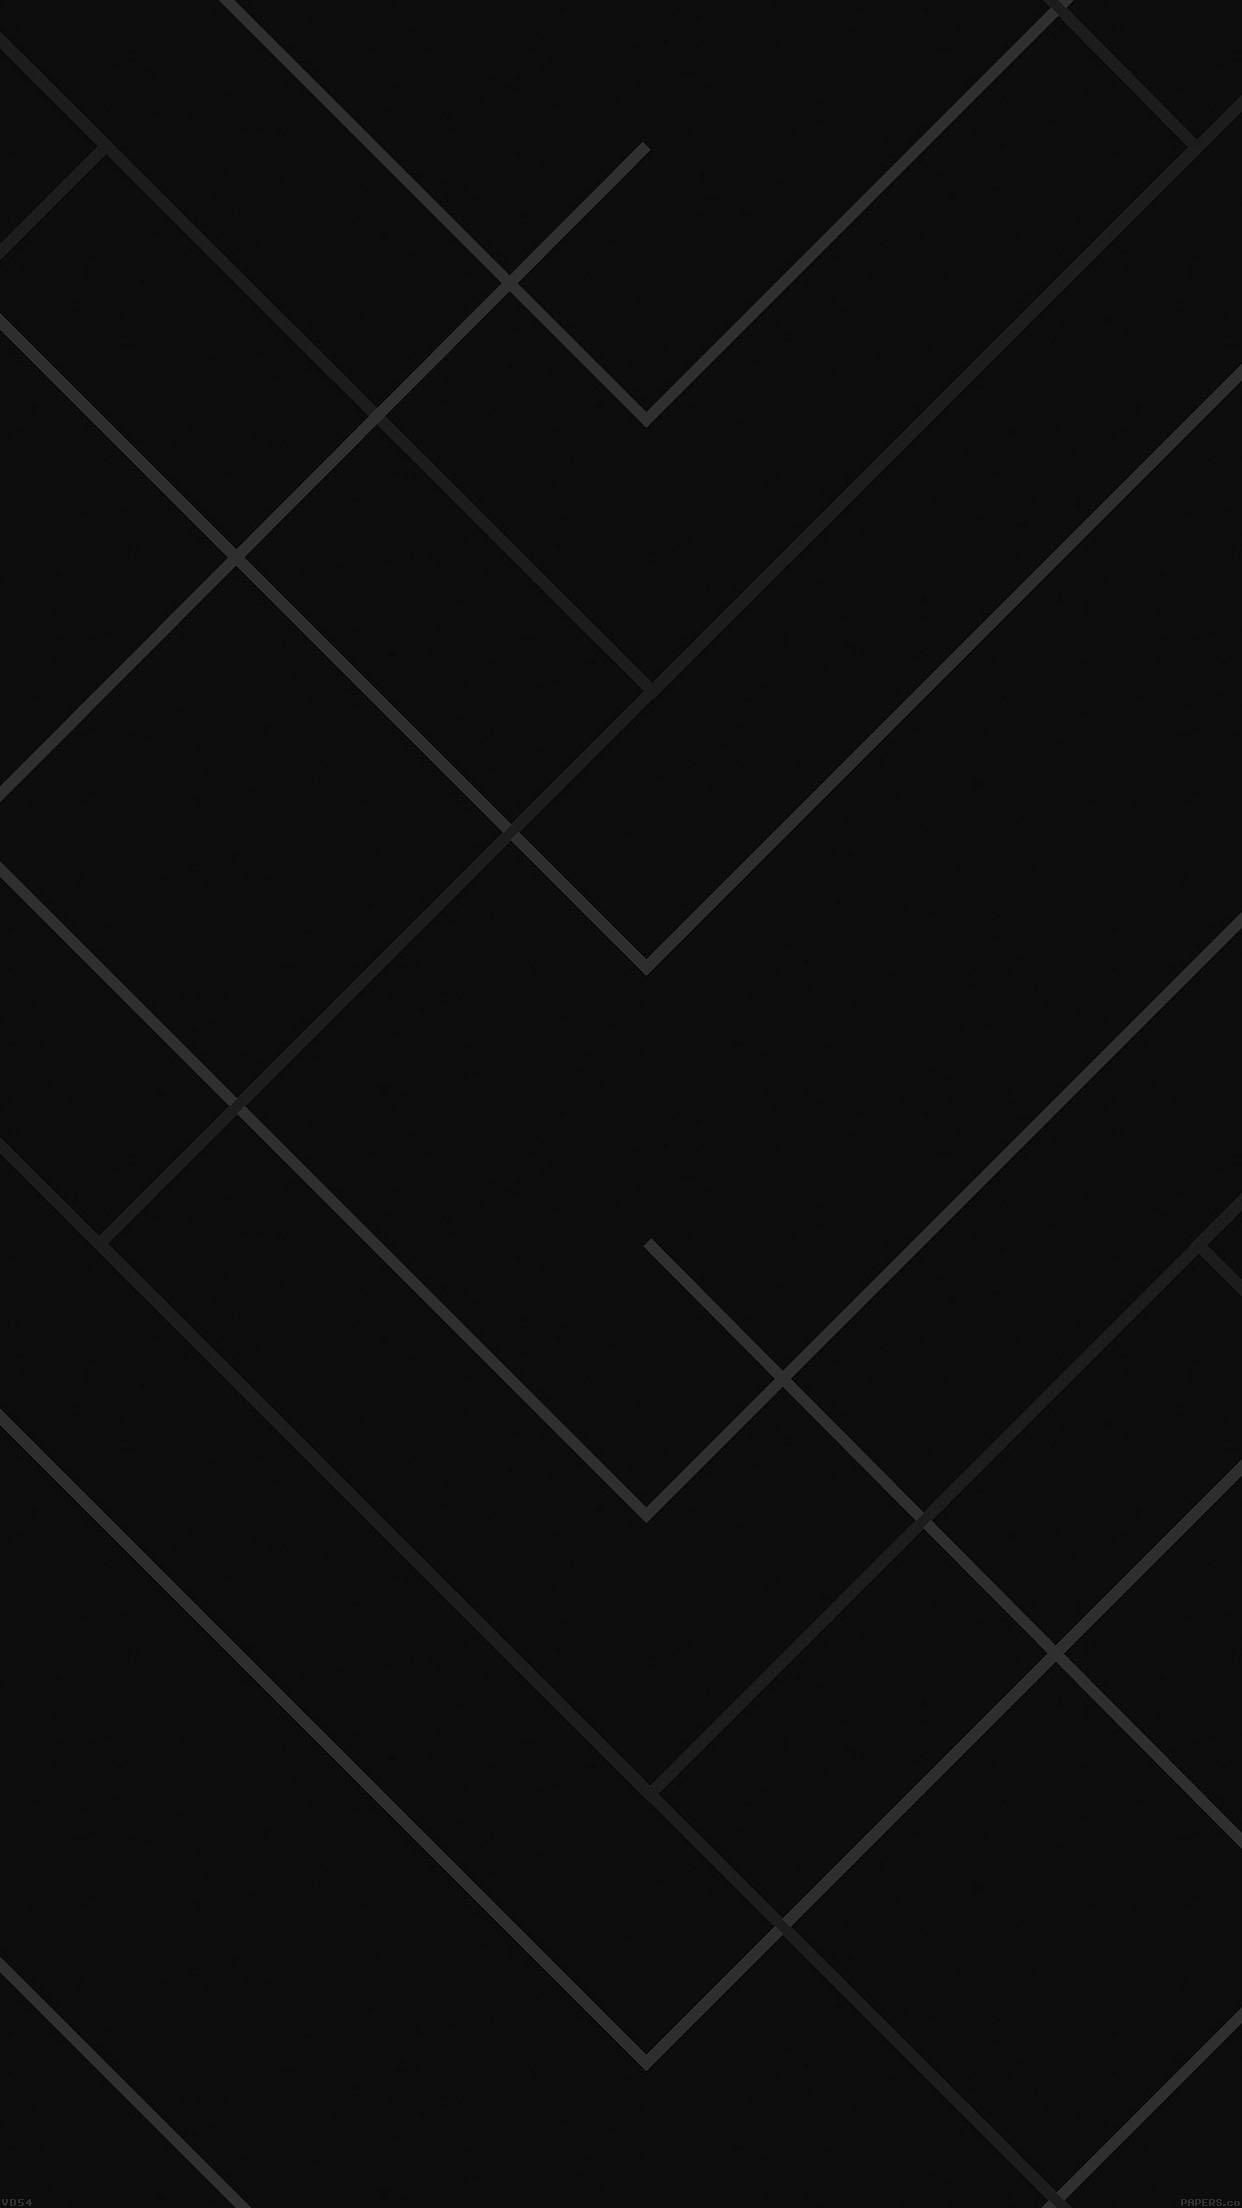 Arthouse Geo Diamond Mono Geometric Black and White Wallpaper